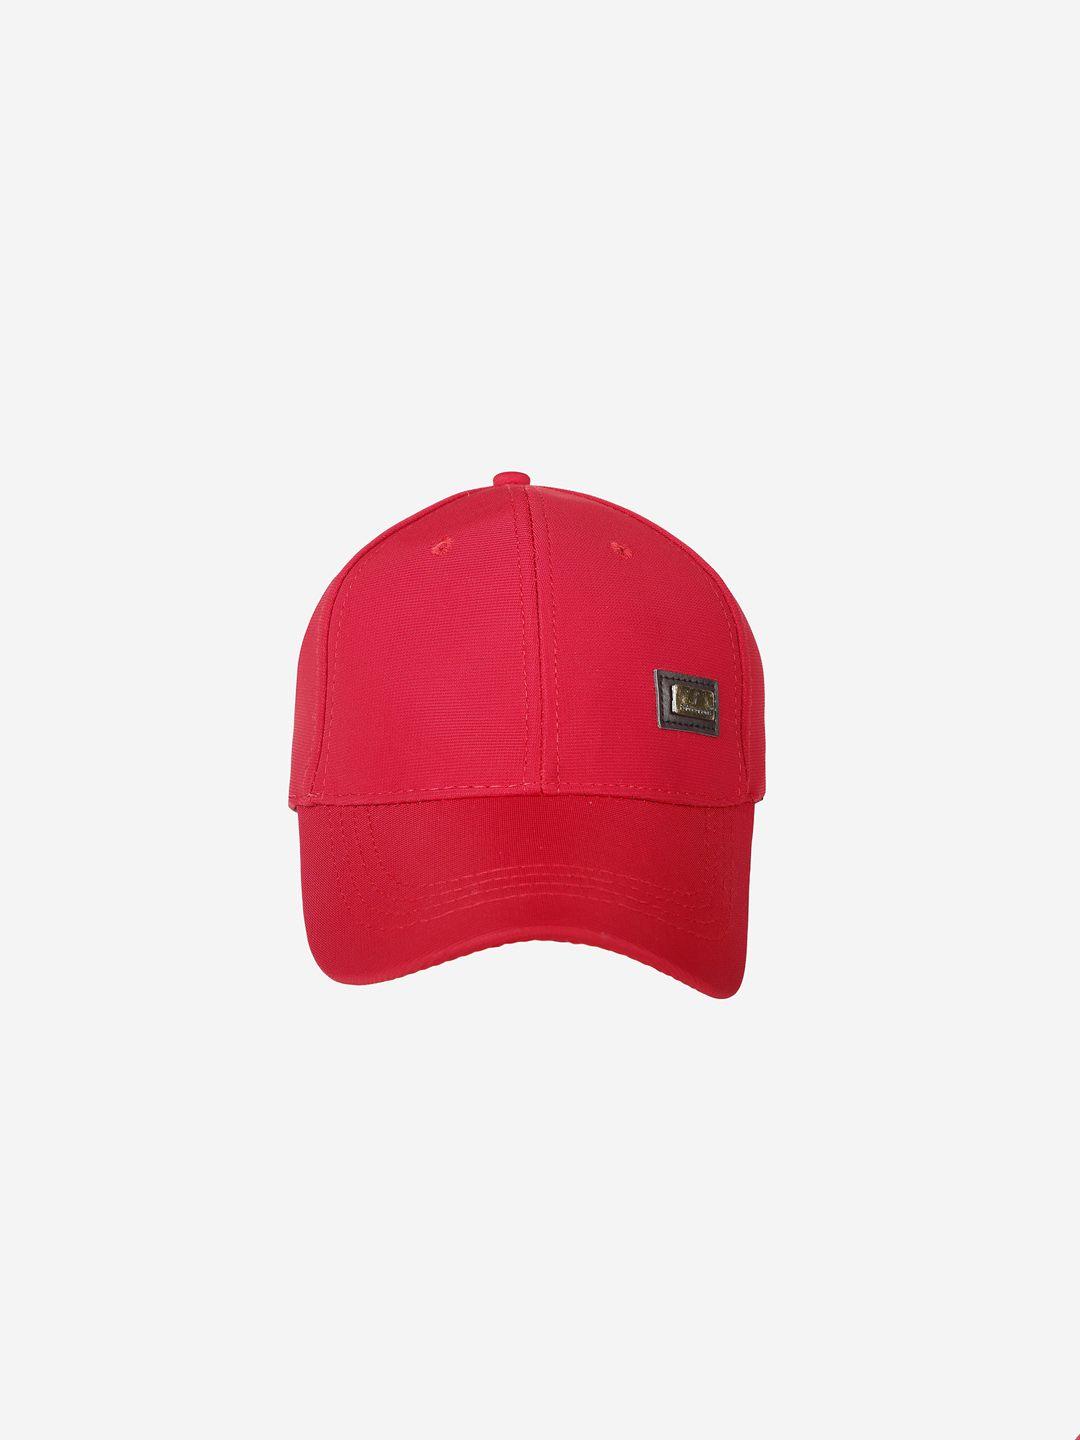 fabseasons unisex red solid baseball cap